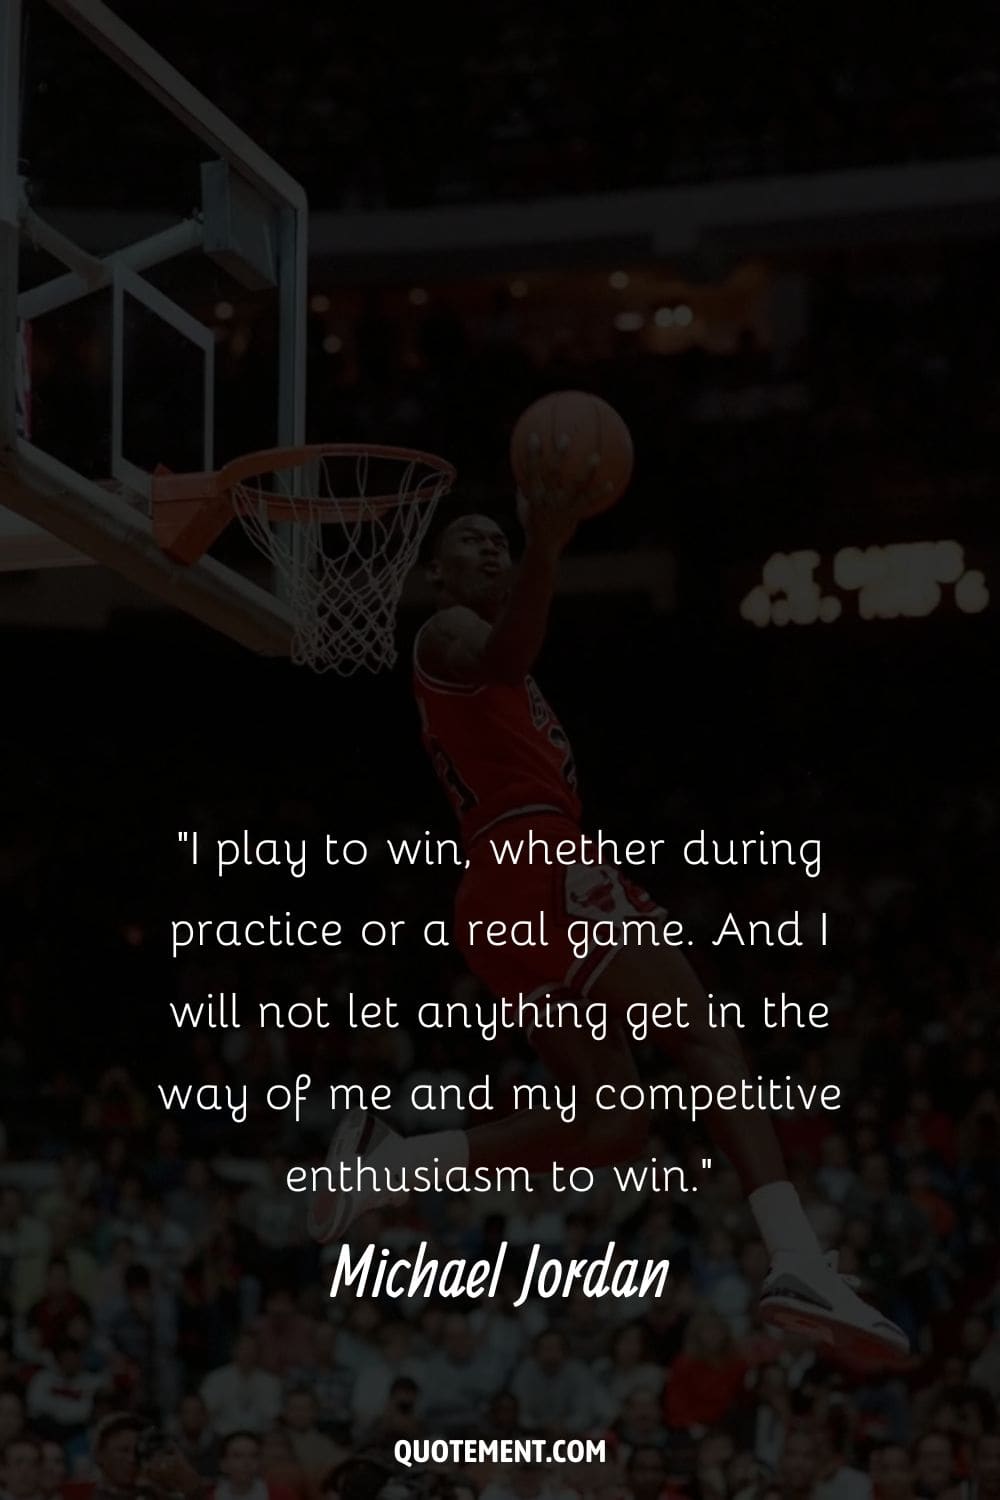 Michael Jordan jumps high with ball toward the basket